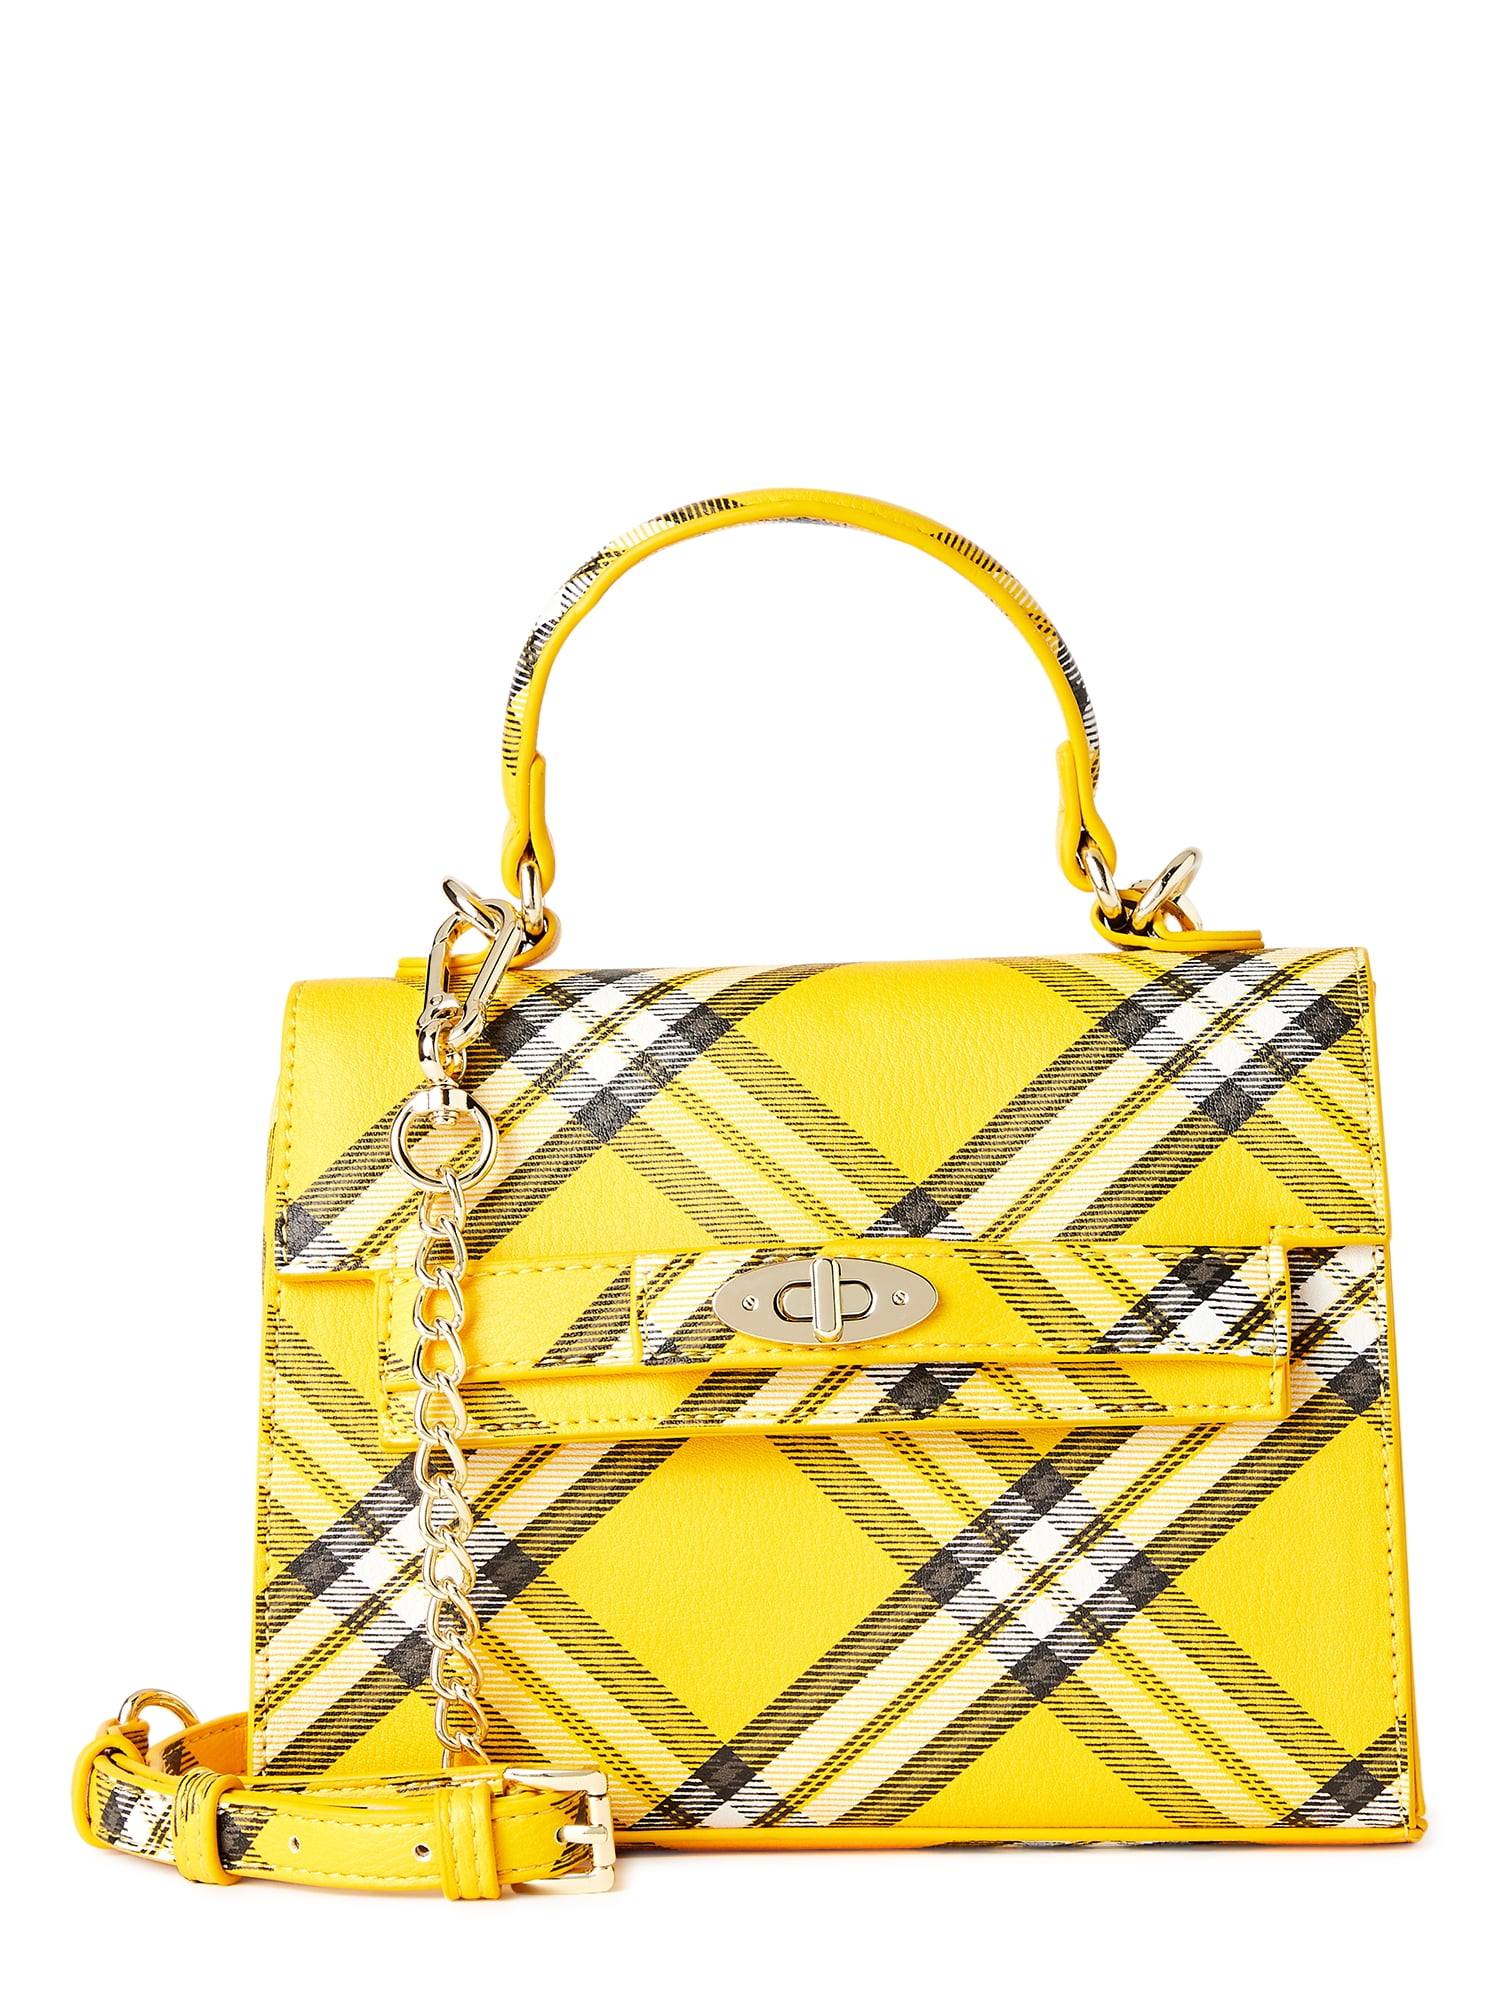 Madden NYC Women's Boxy Top Handle Bag Yellow Plaid - Walmart.com